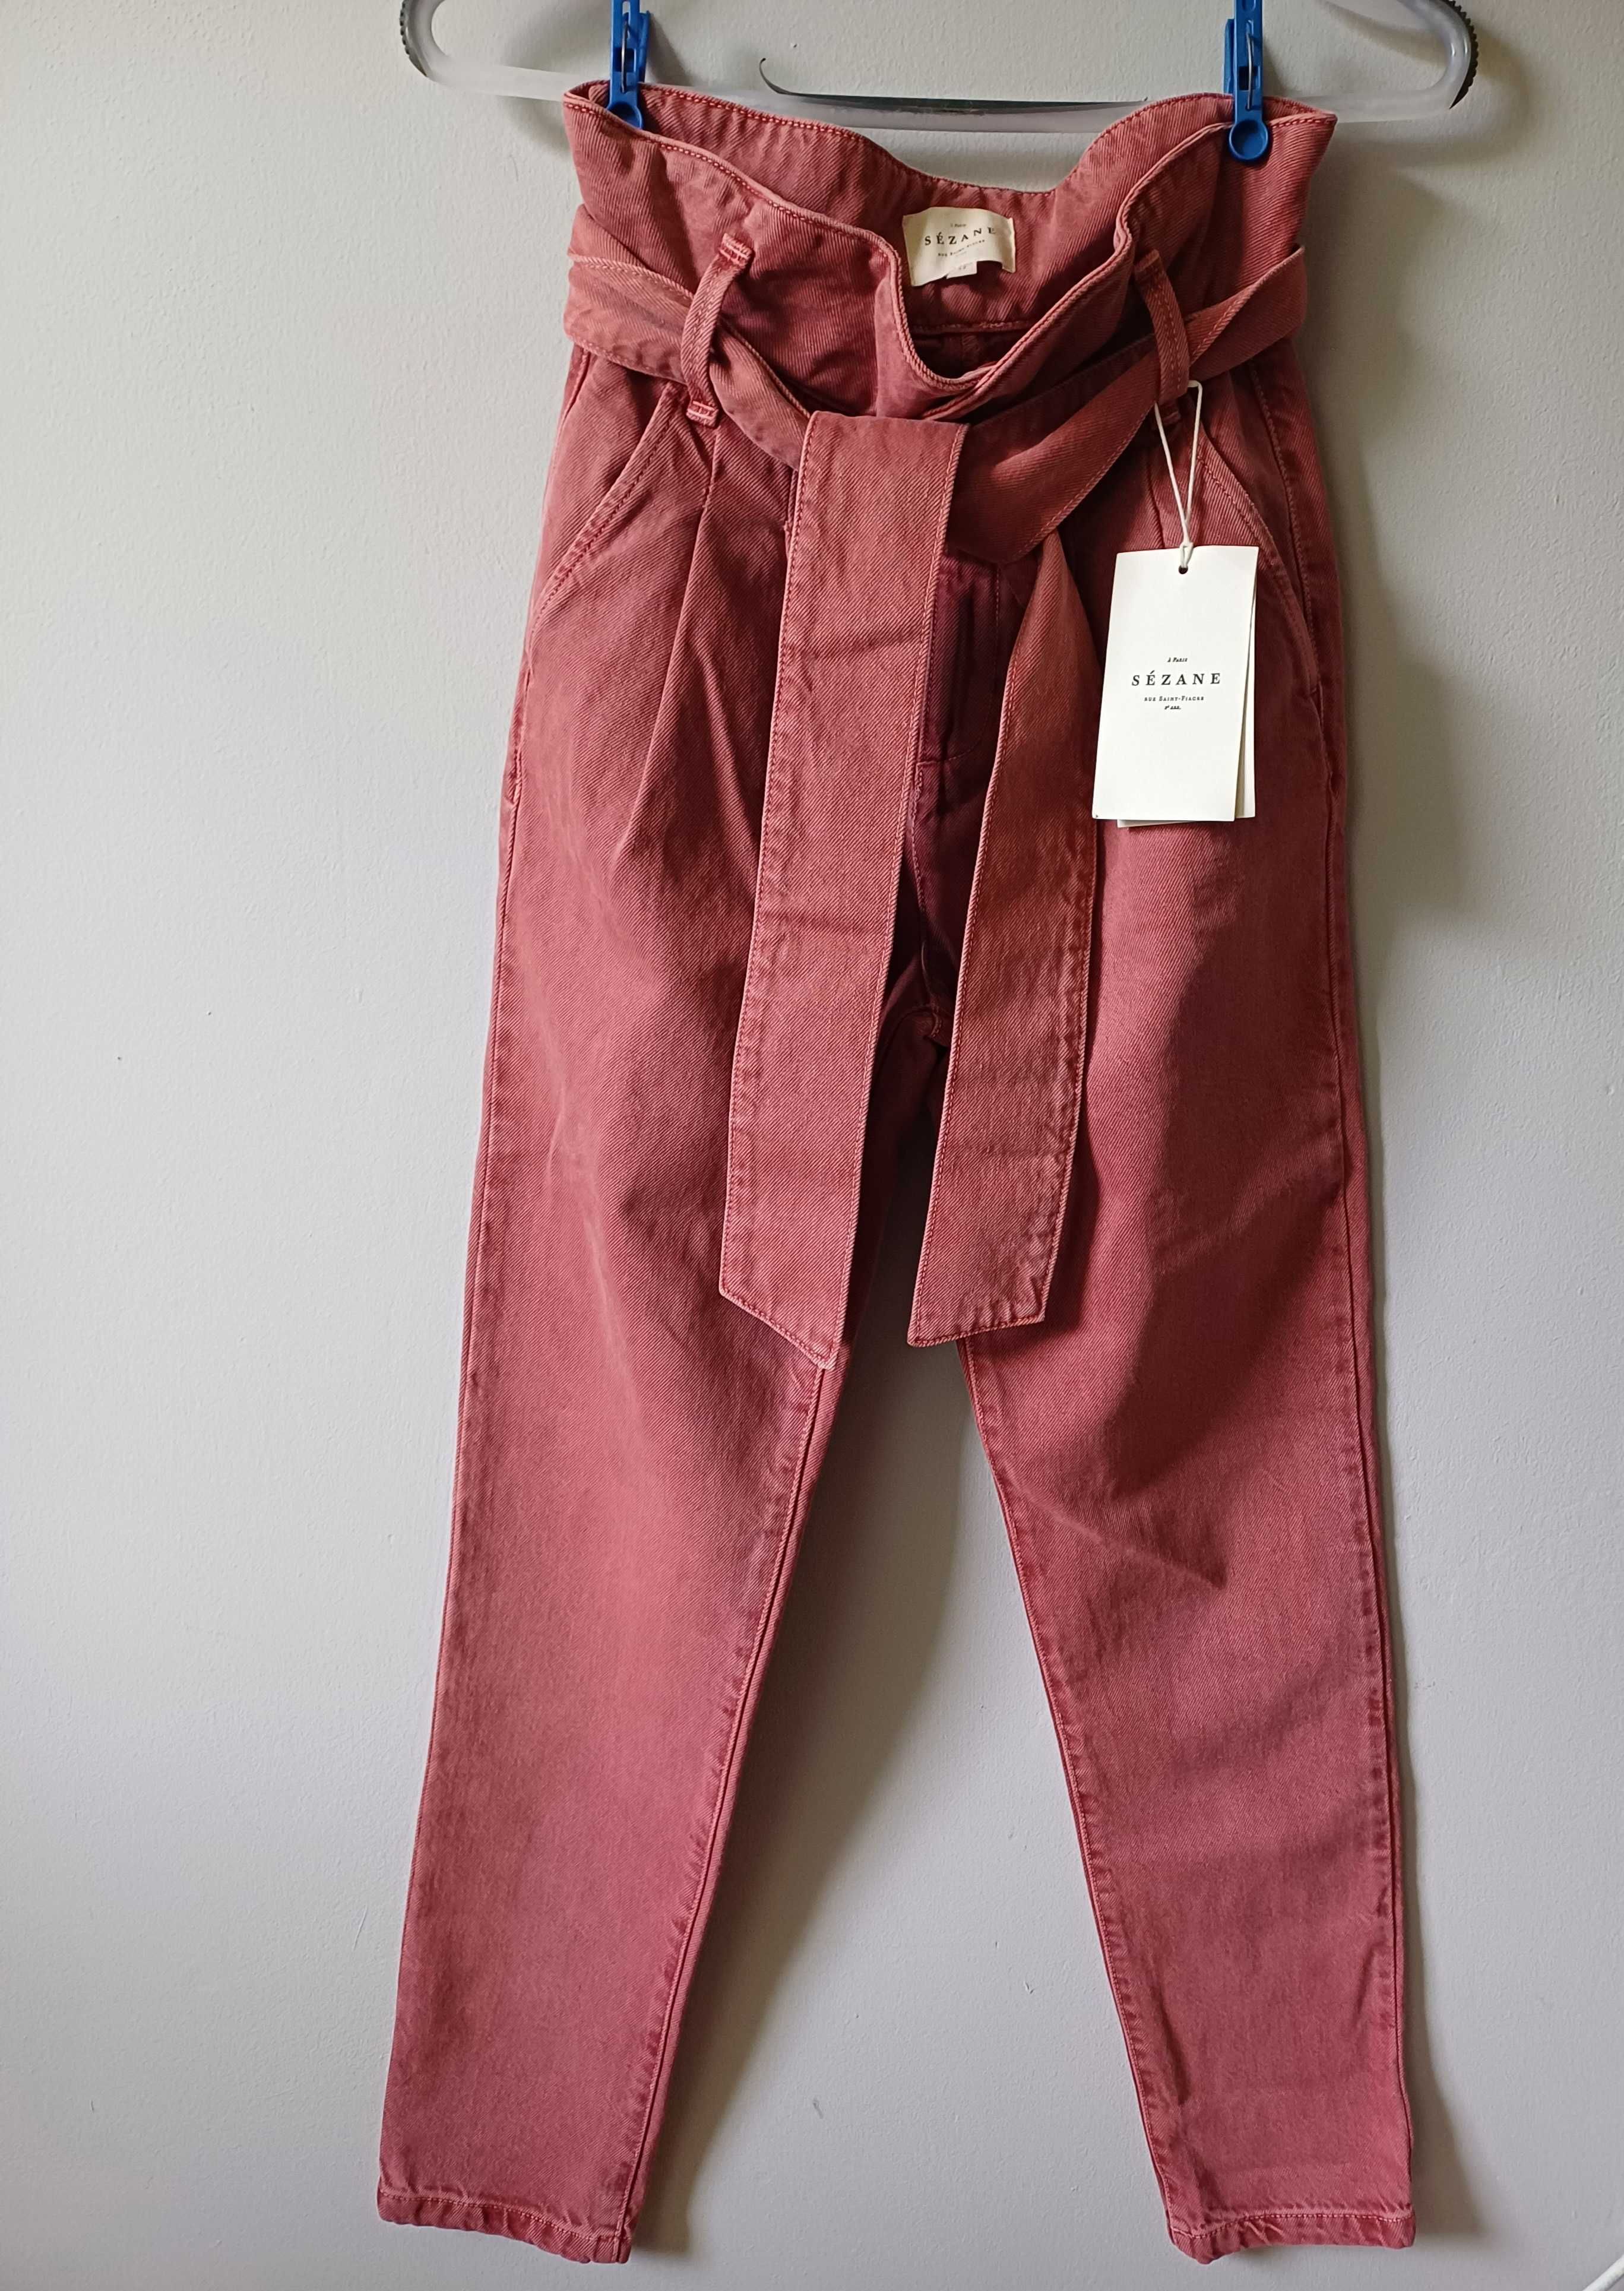 Sezane spodnie Pantalon Austin Boi De Rose nowe z metką rozmiar XXS